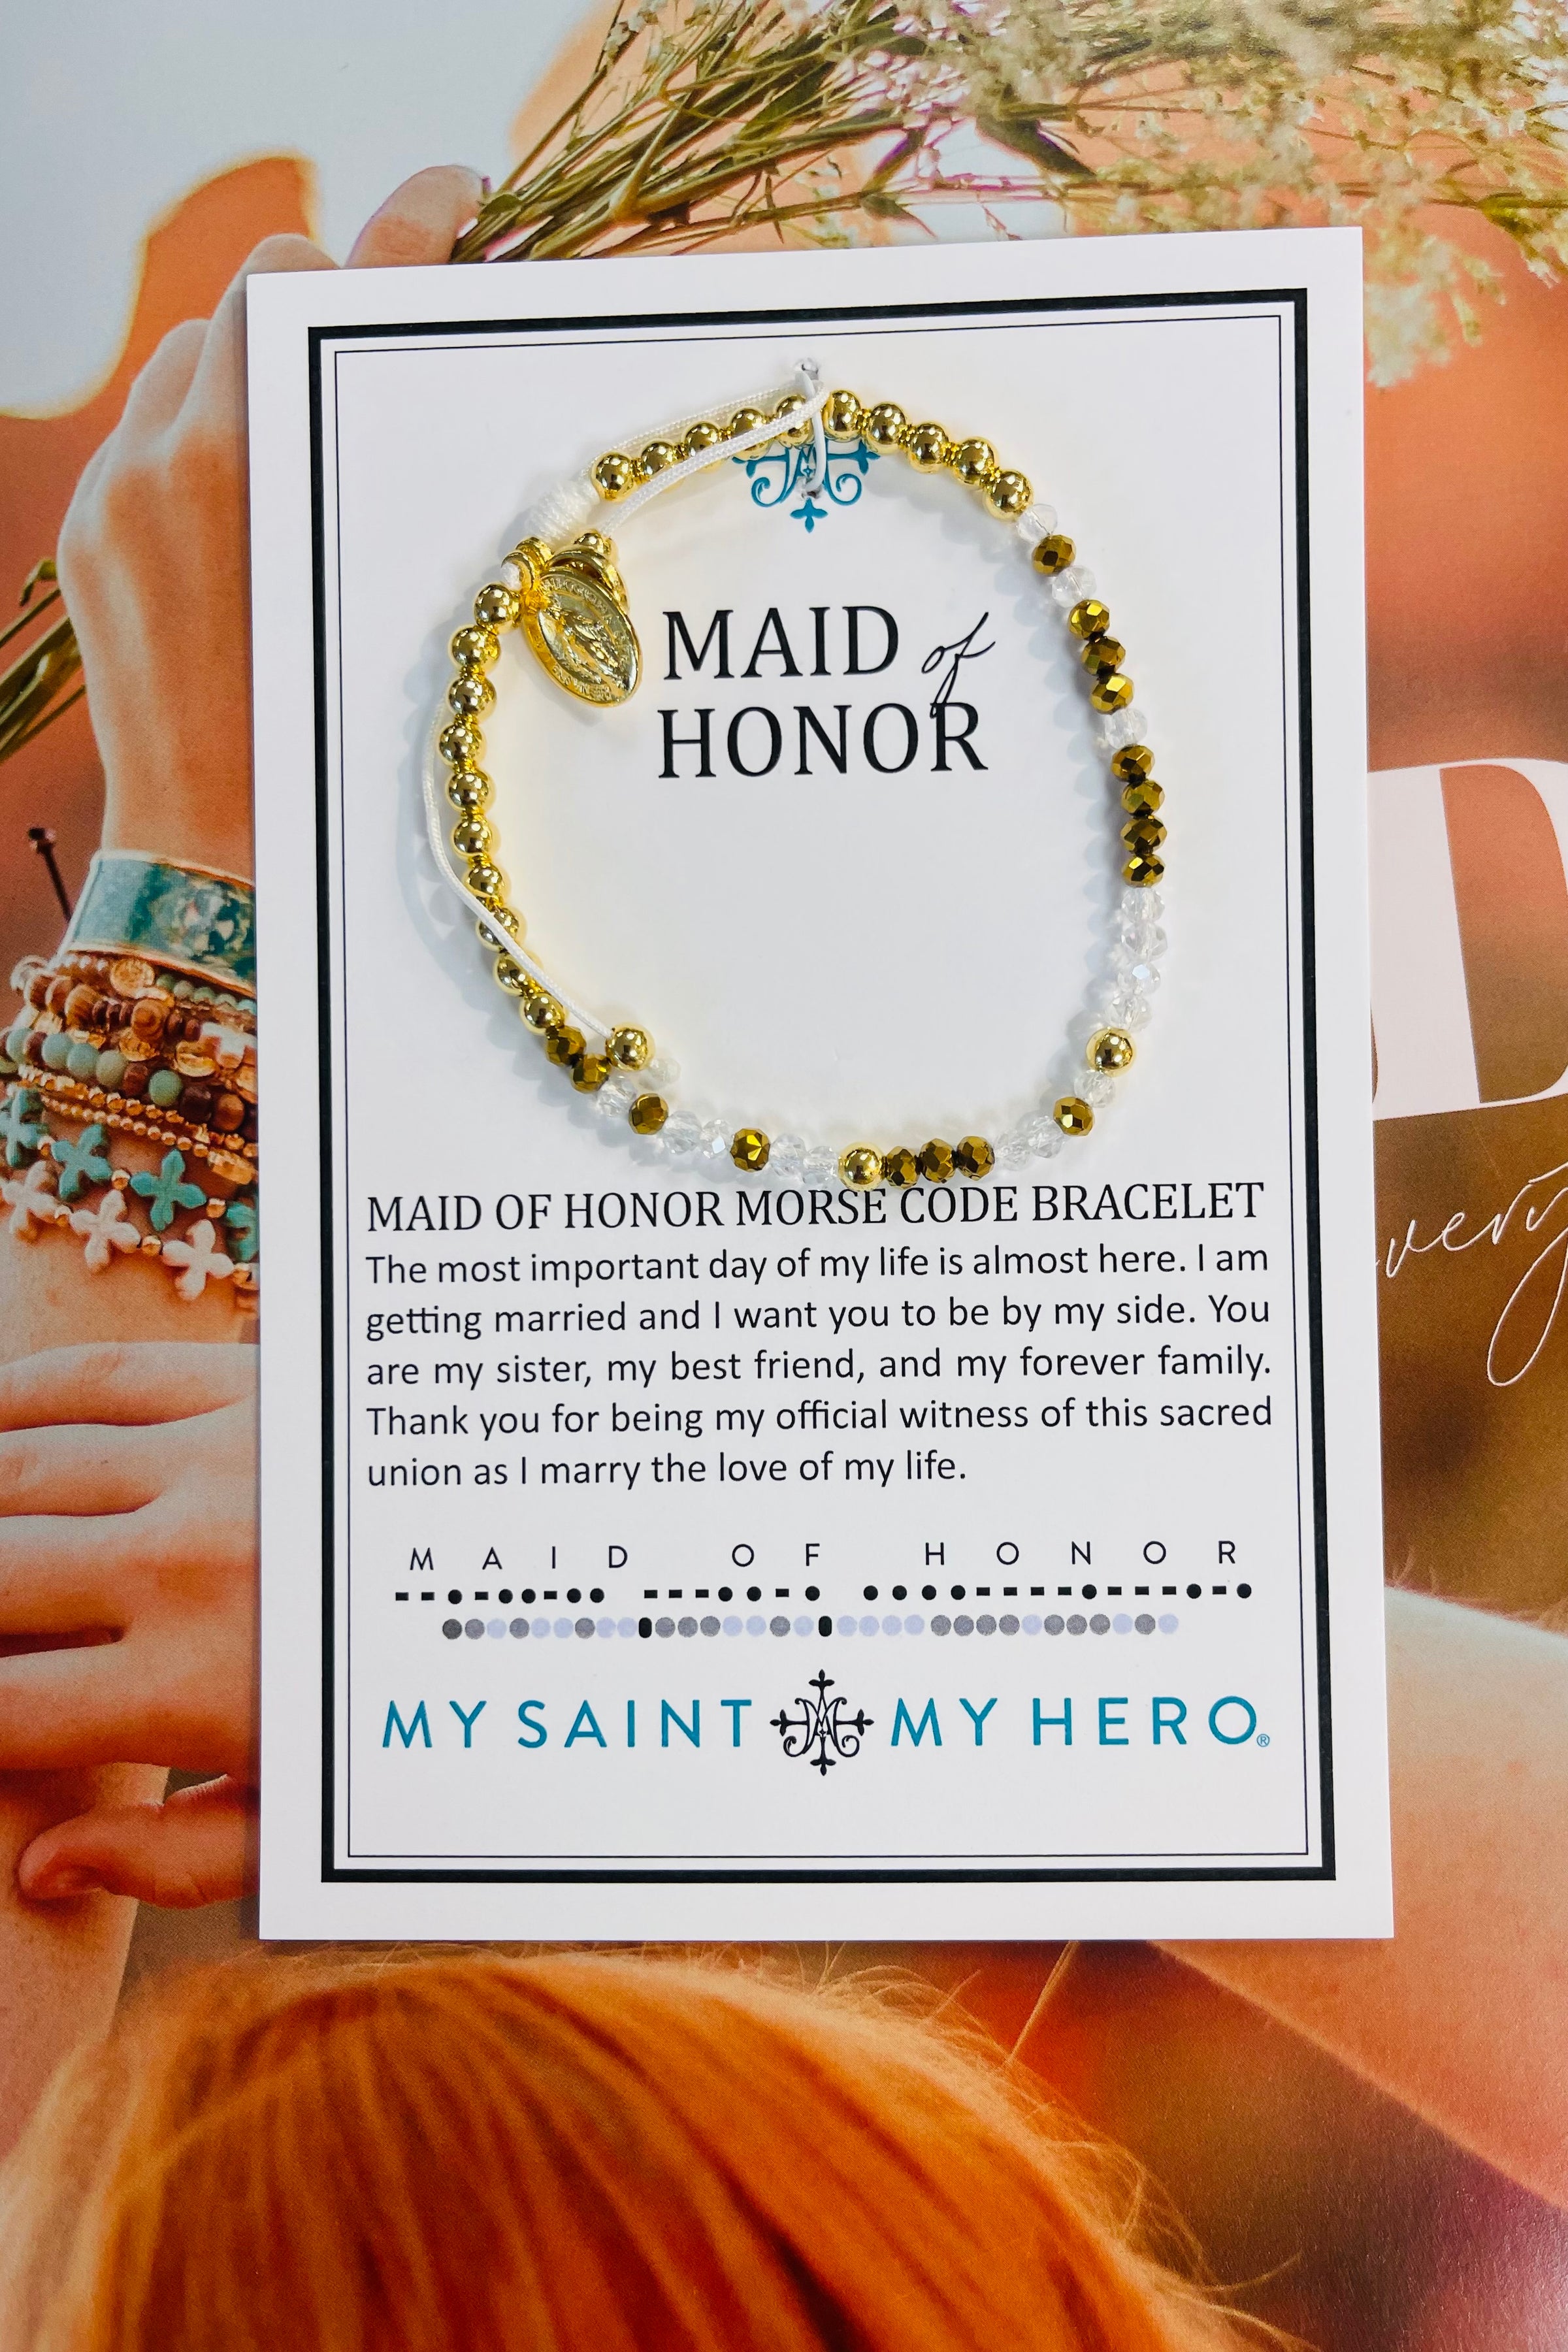 Maid of Honor Morse Code Bracelet Gld